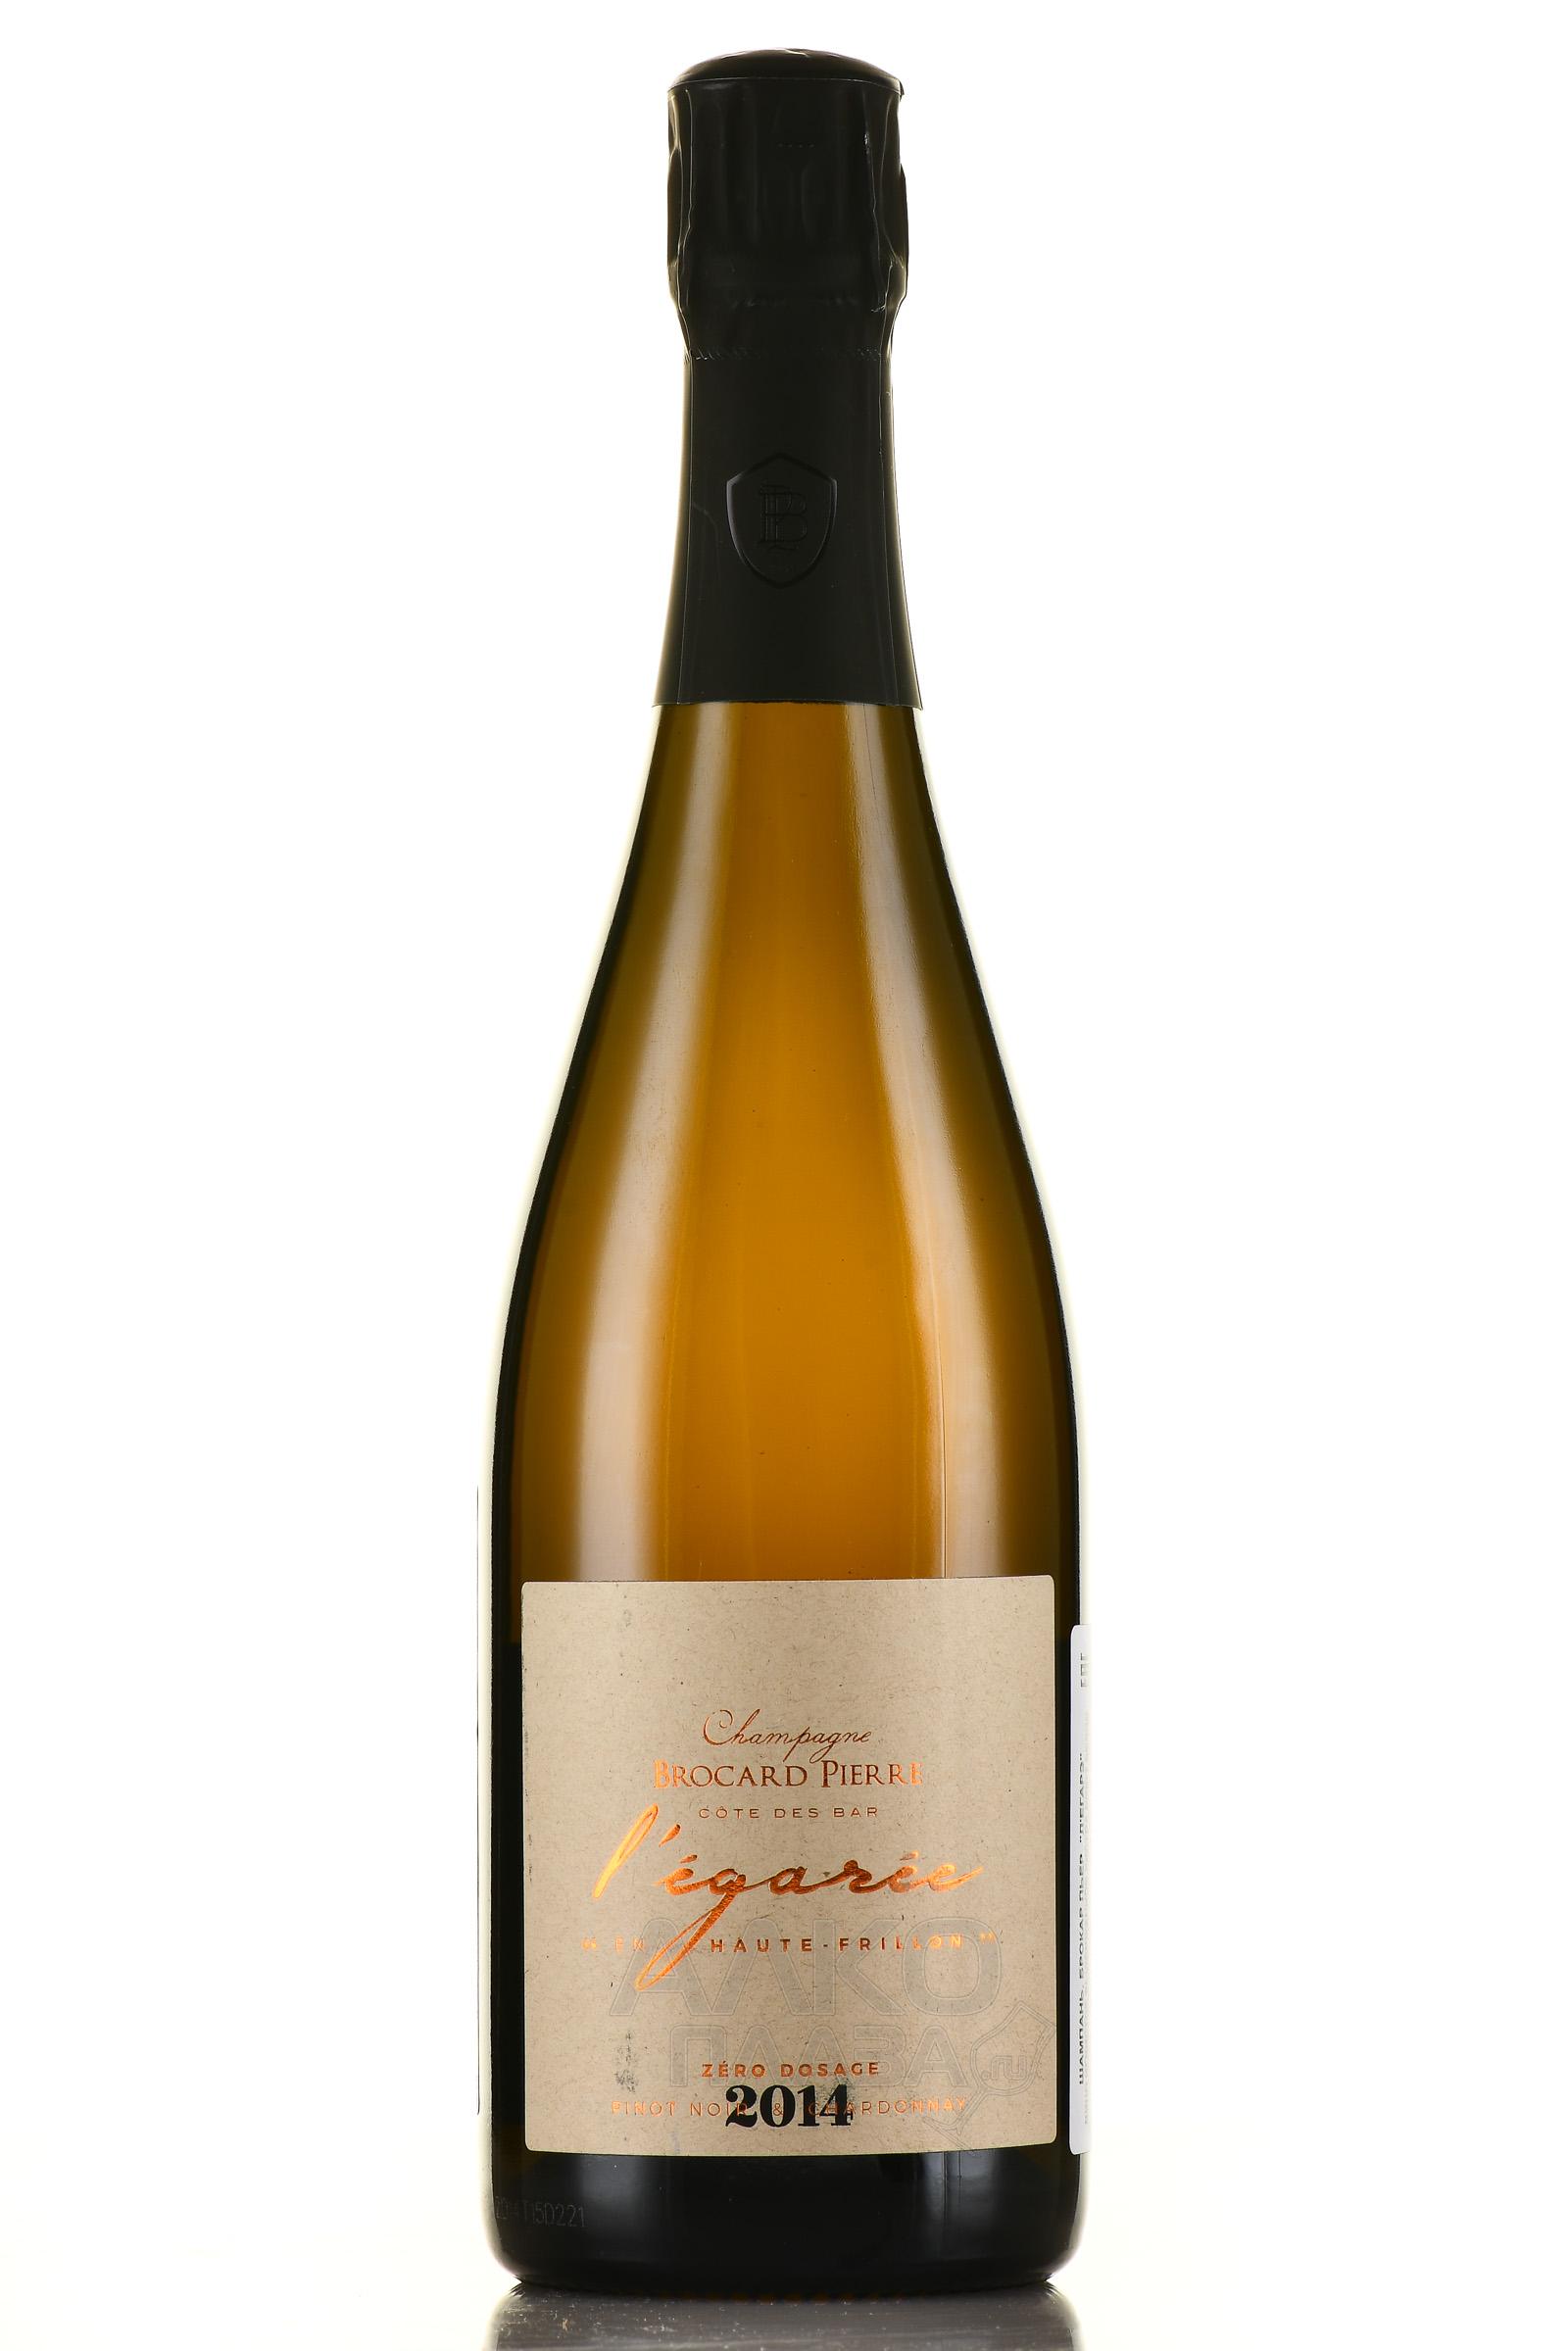 Brocard Pierre L’Egaree Champagne - шампанское Шампань Брокар Пьер Л’Егарэ 0.75 л белое экстра брют